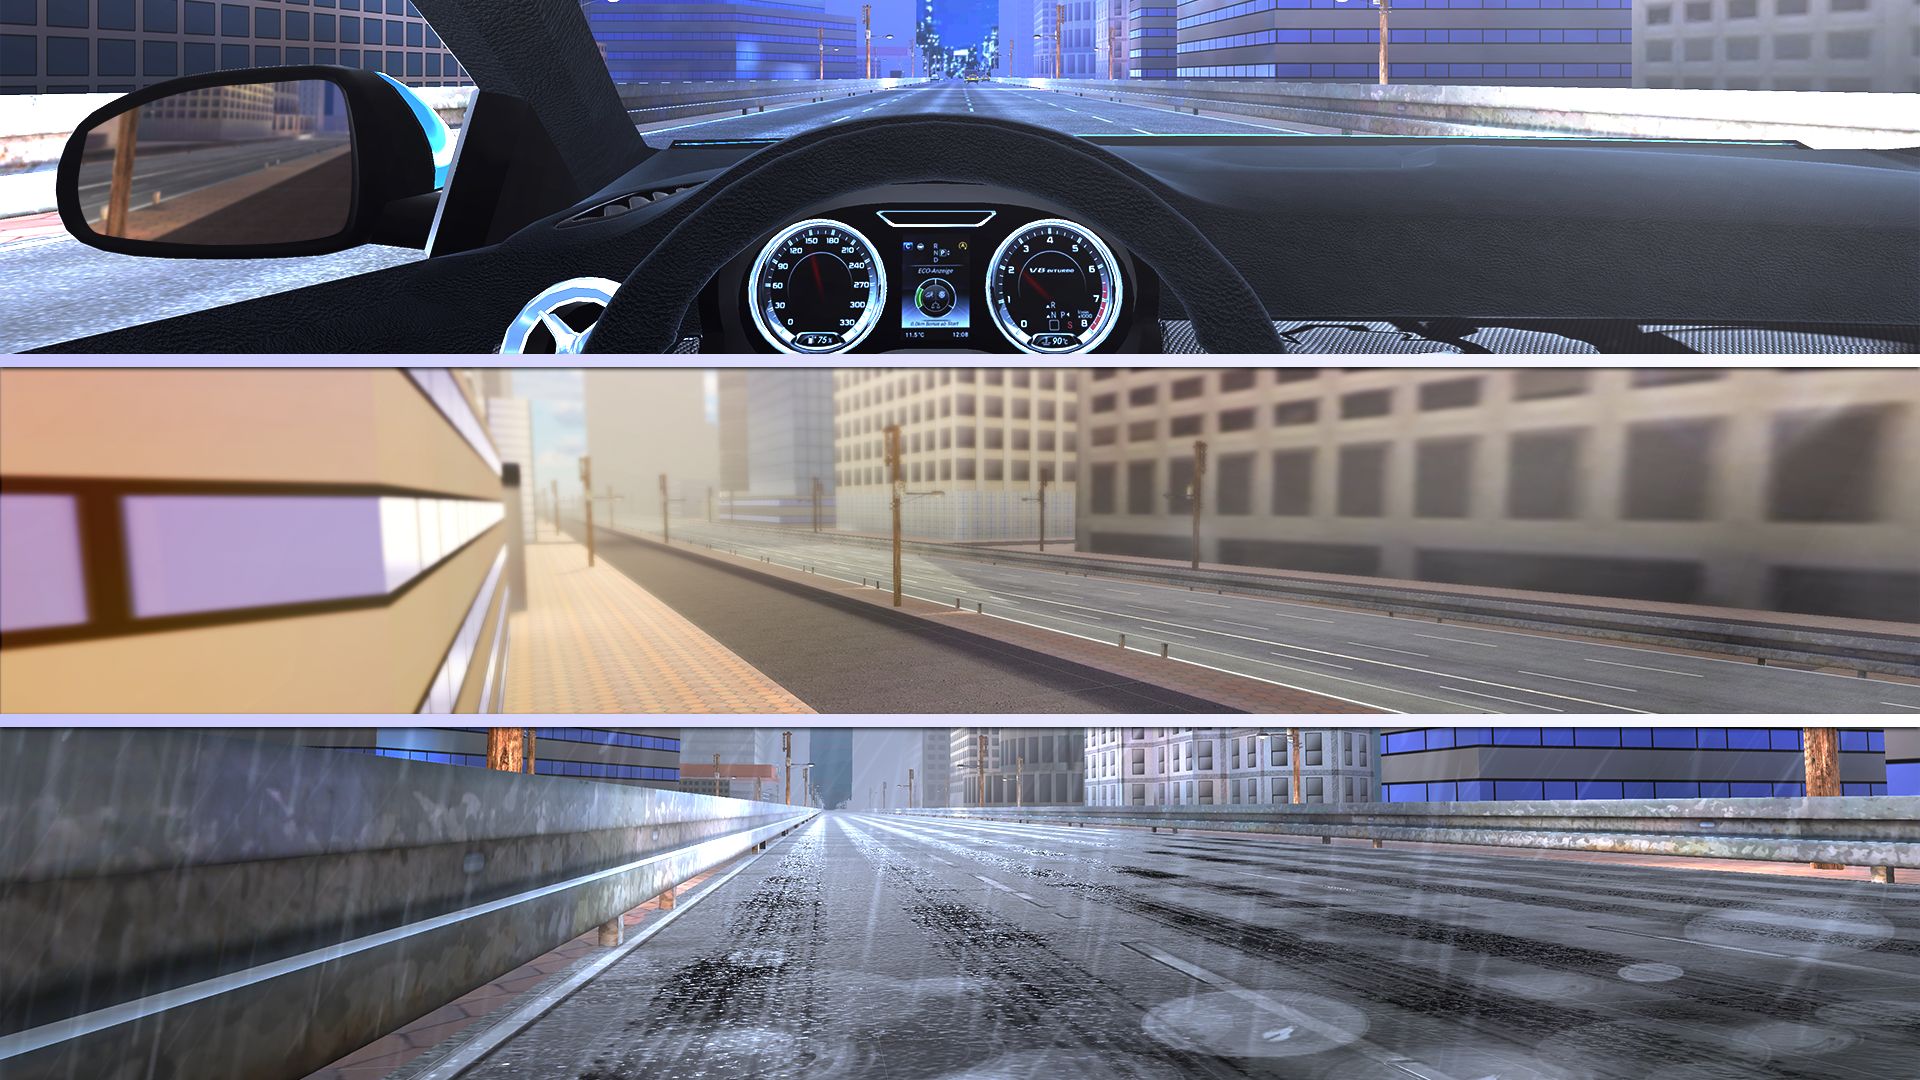 PetrolHead Highway Racing - Android game screenshots.